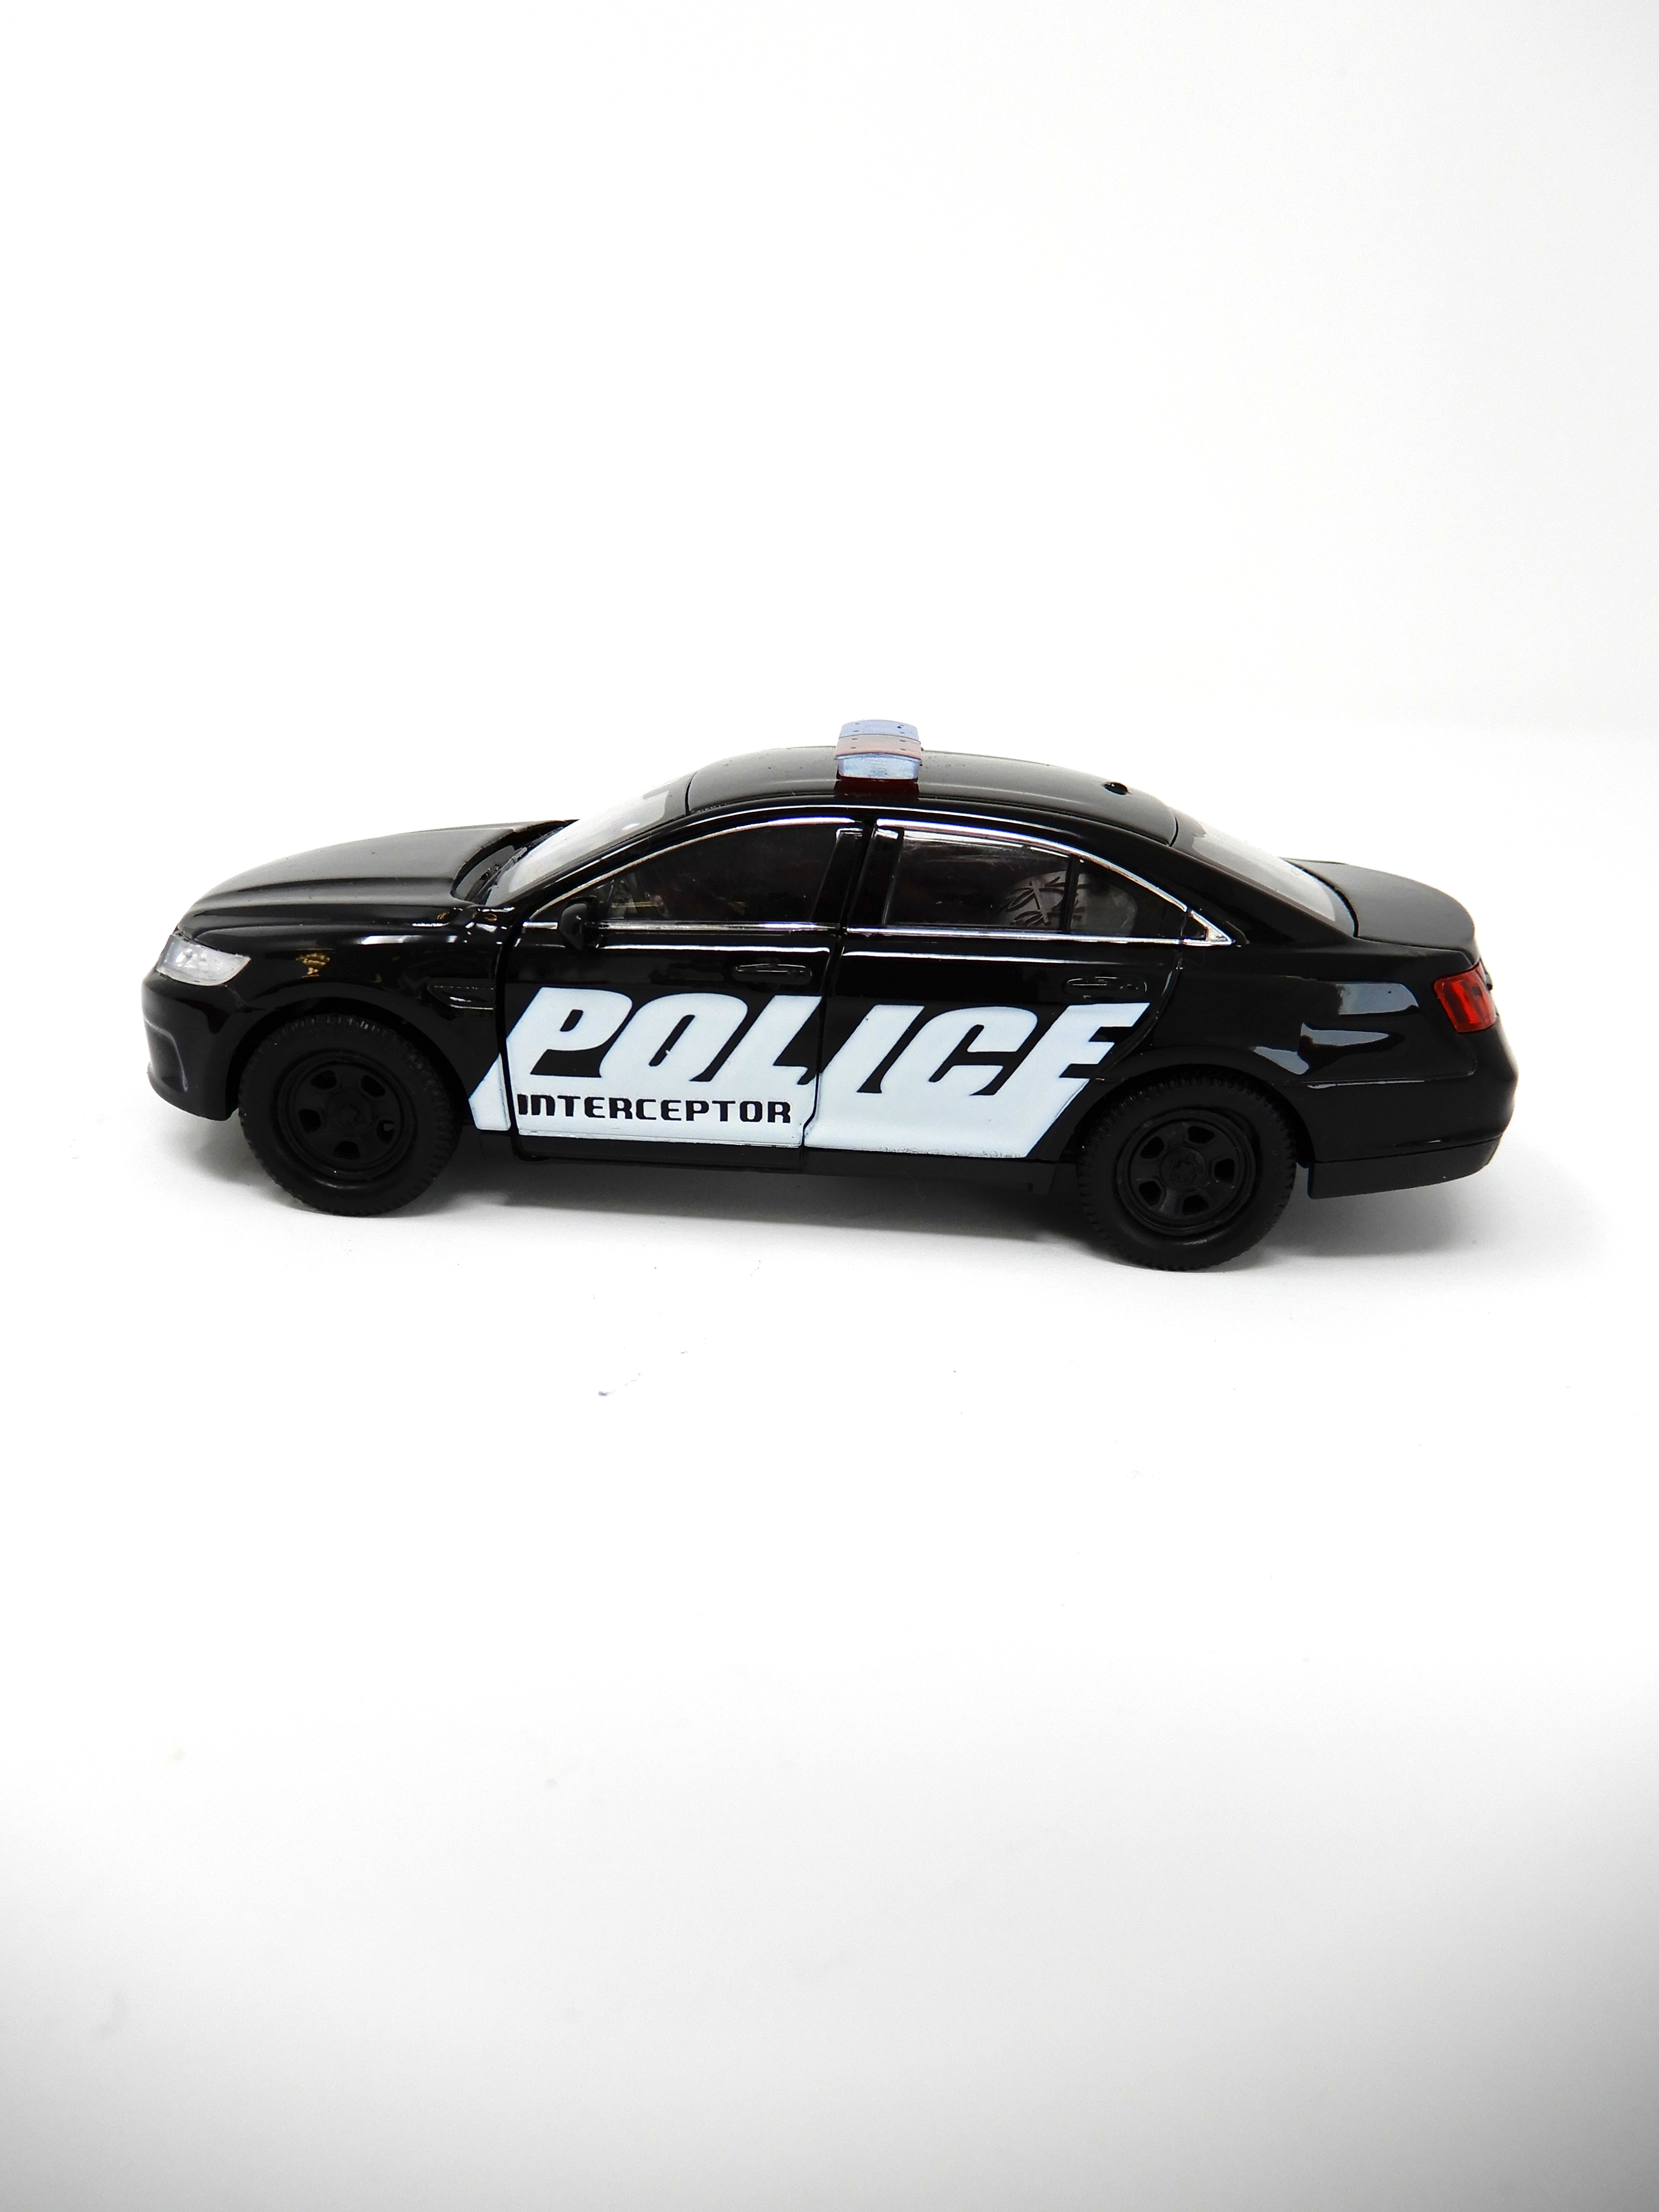 a toy police car